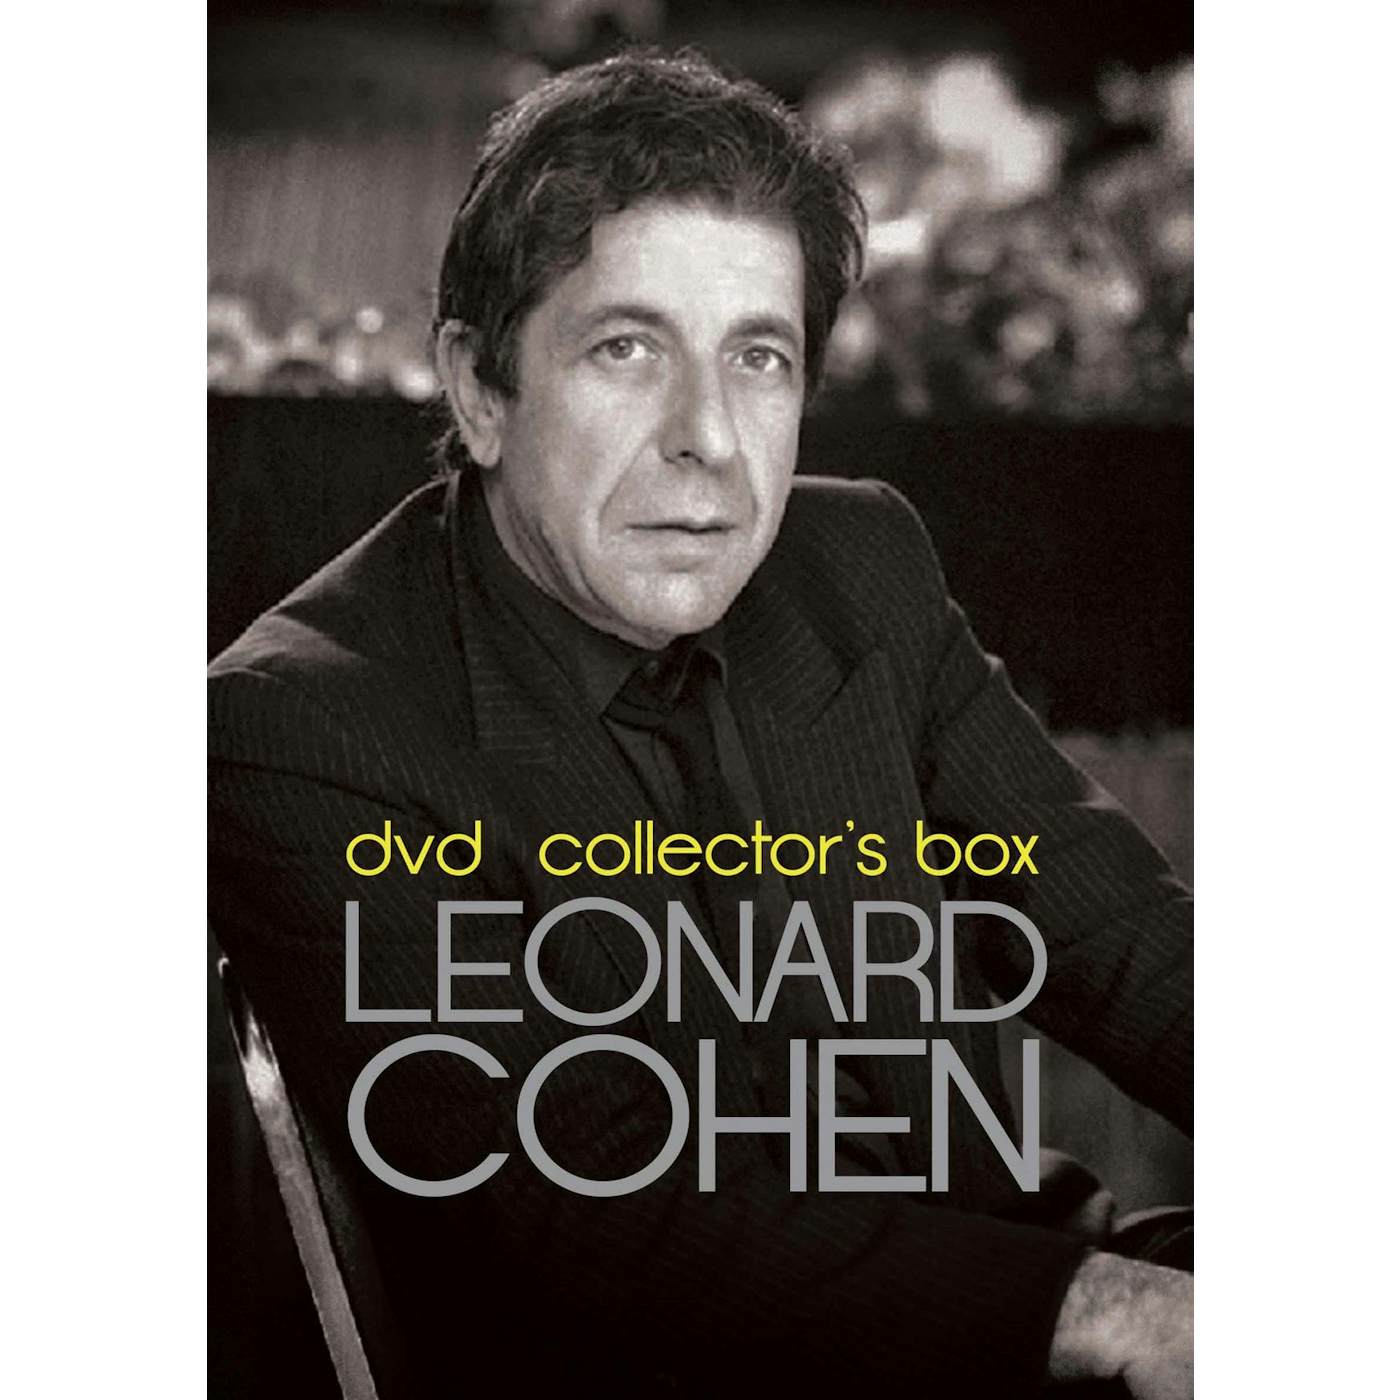 Leonard Cohen DVD - DVD Collector's Box (2Dvd)